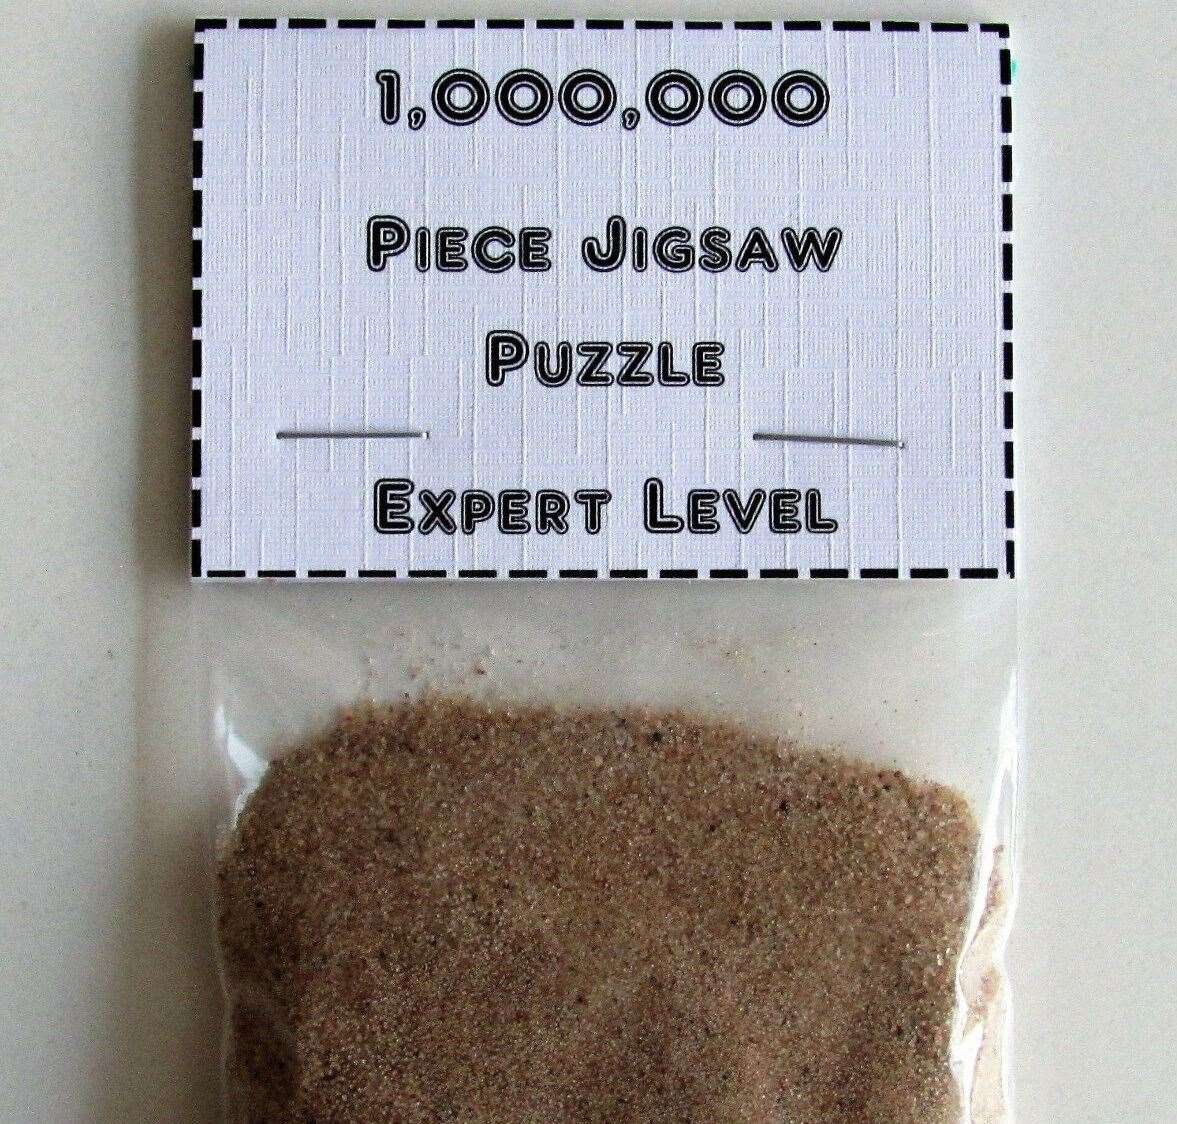 The million piece jigsaw